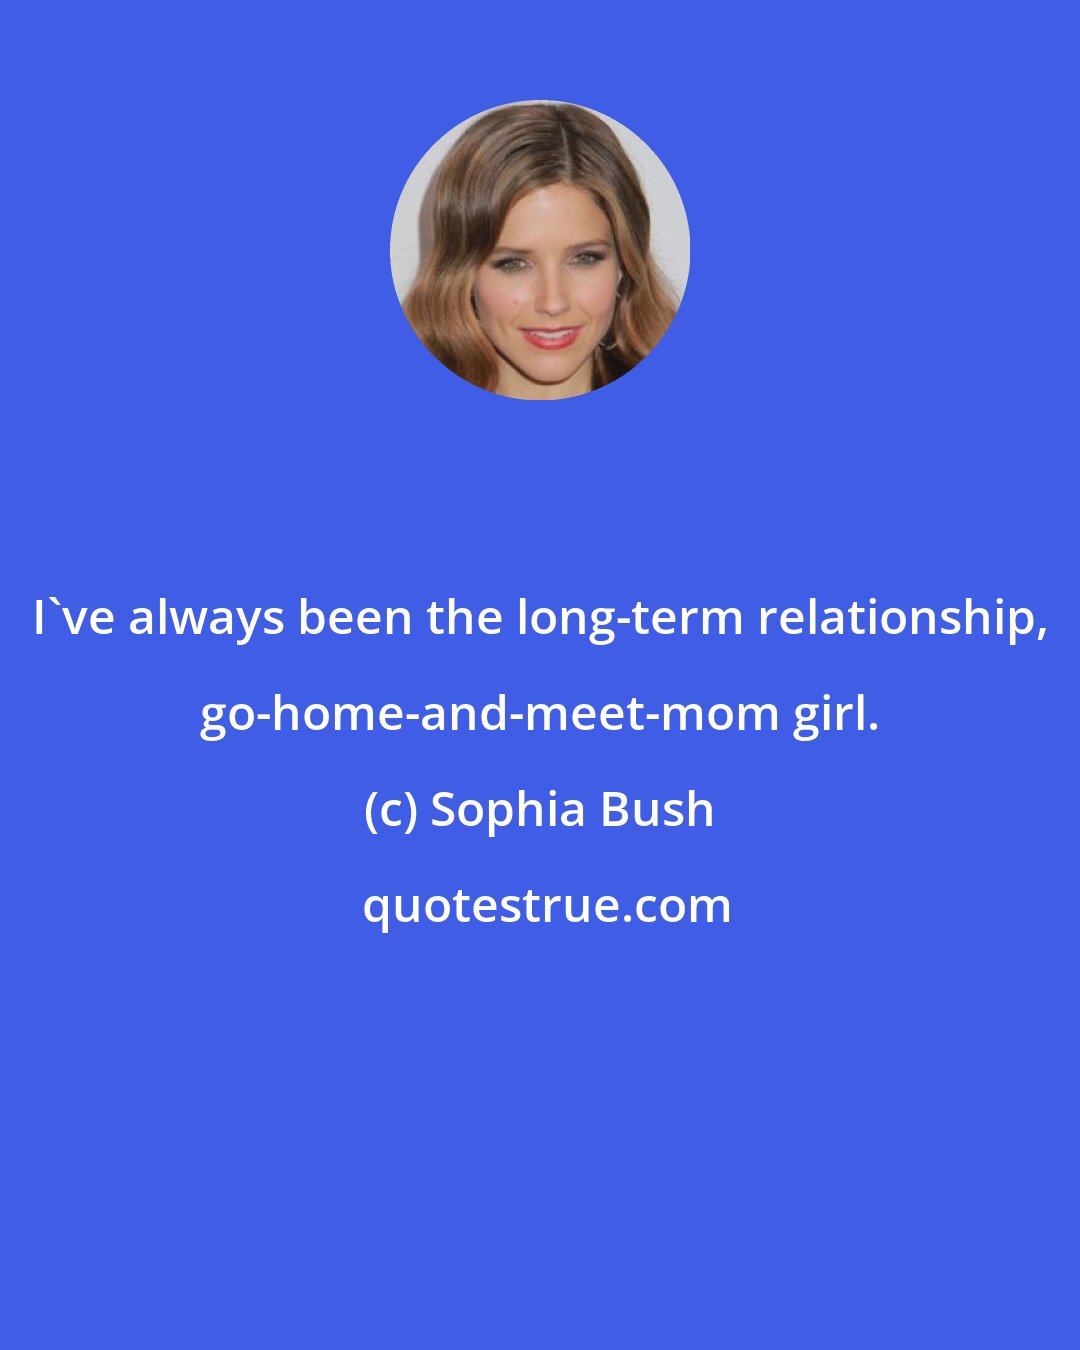 Sophia Bush: I've always been the long-term relationship, go-home-and-meet-mom girl.